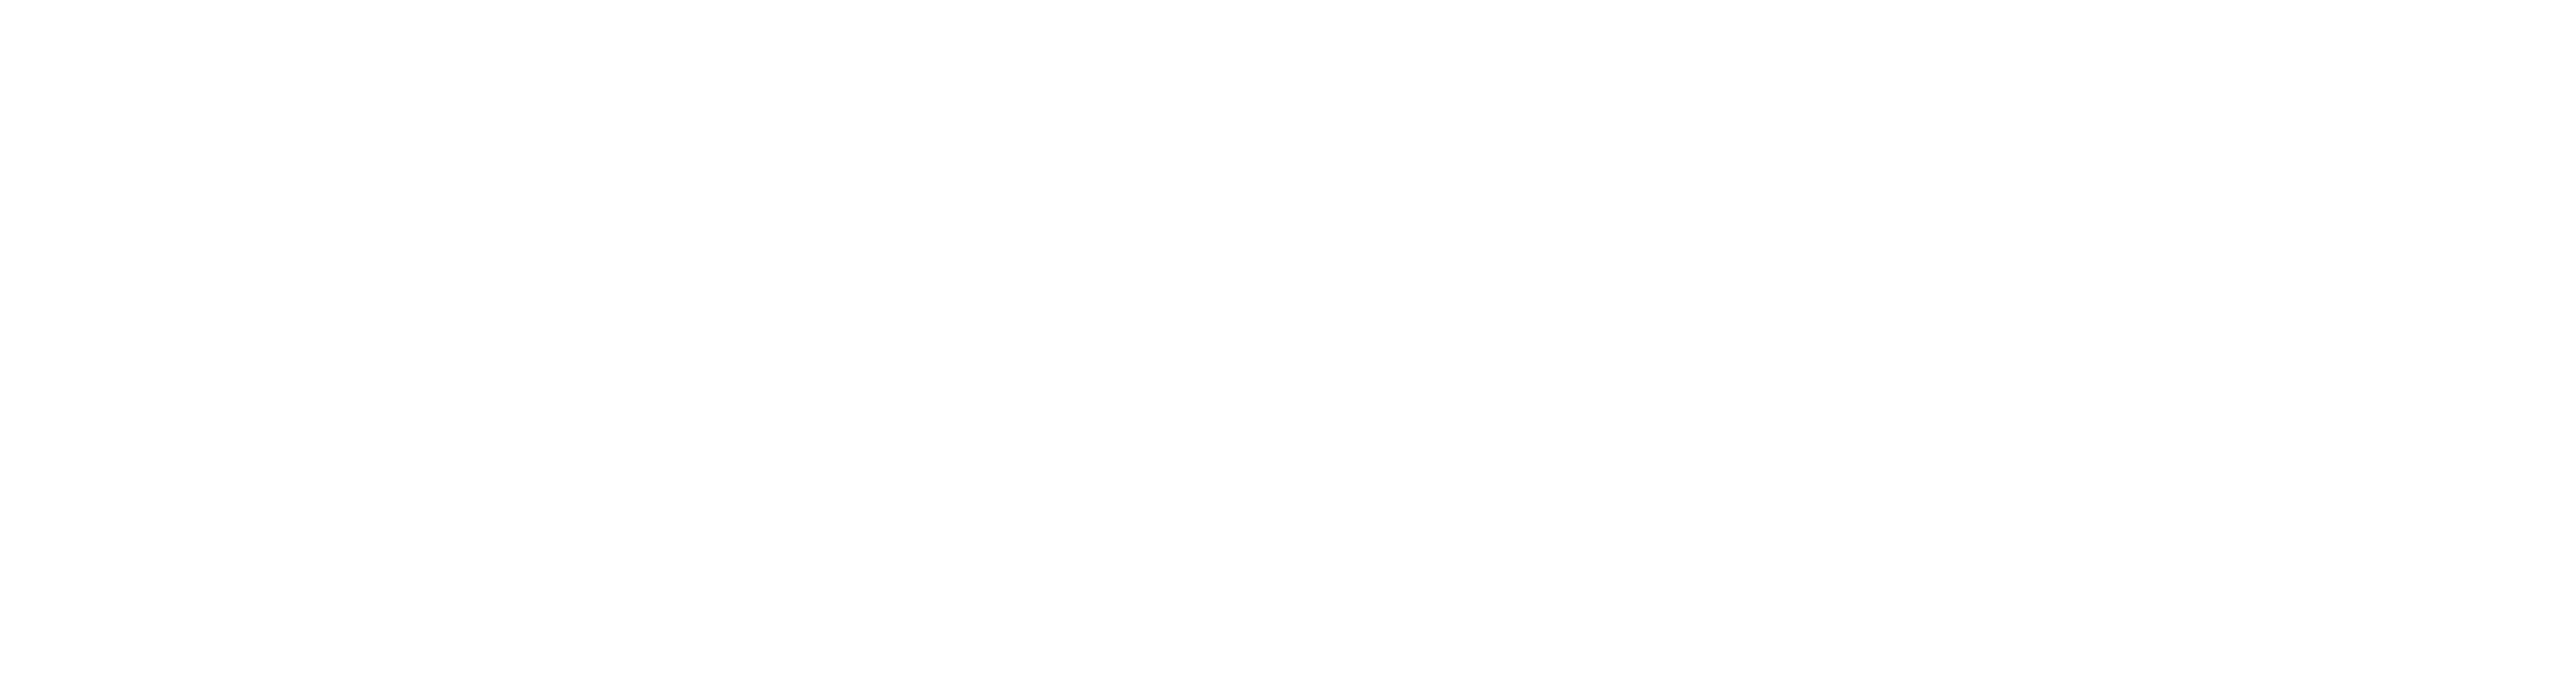 Krist Law Firm logo